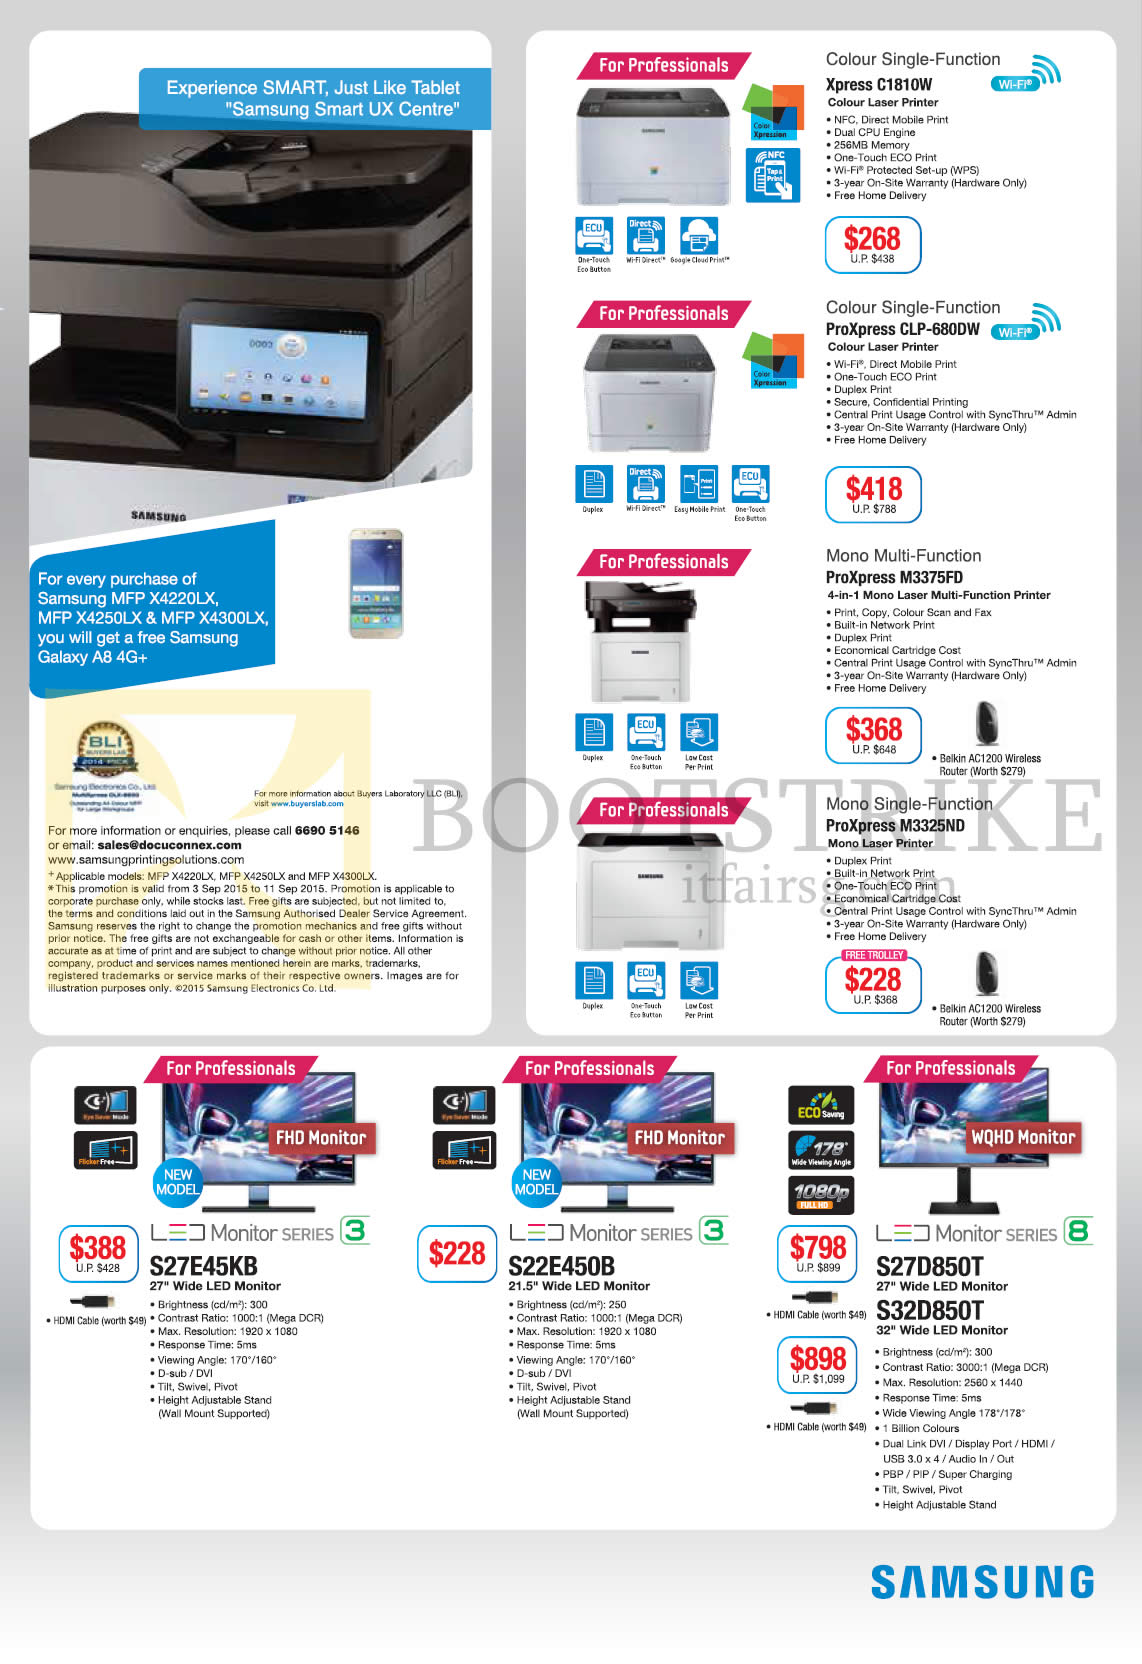 COMEX 2015 price list image brochure of Samsung LED Monitors Laser Printers, Xpress C1810W, CLP-680DW, M3375FD, M3325ND, LED, S27E45KB, S22E450B, S27D850T, S32D850T